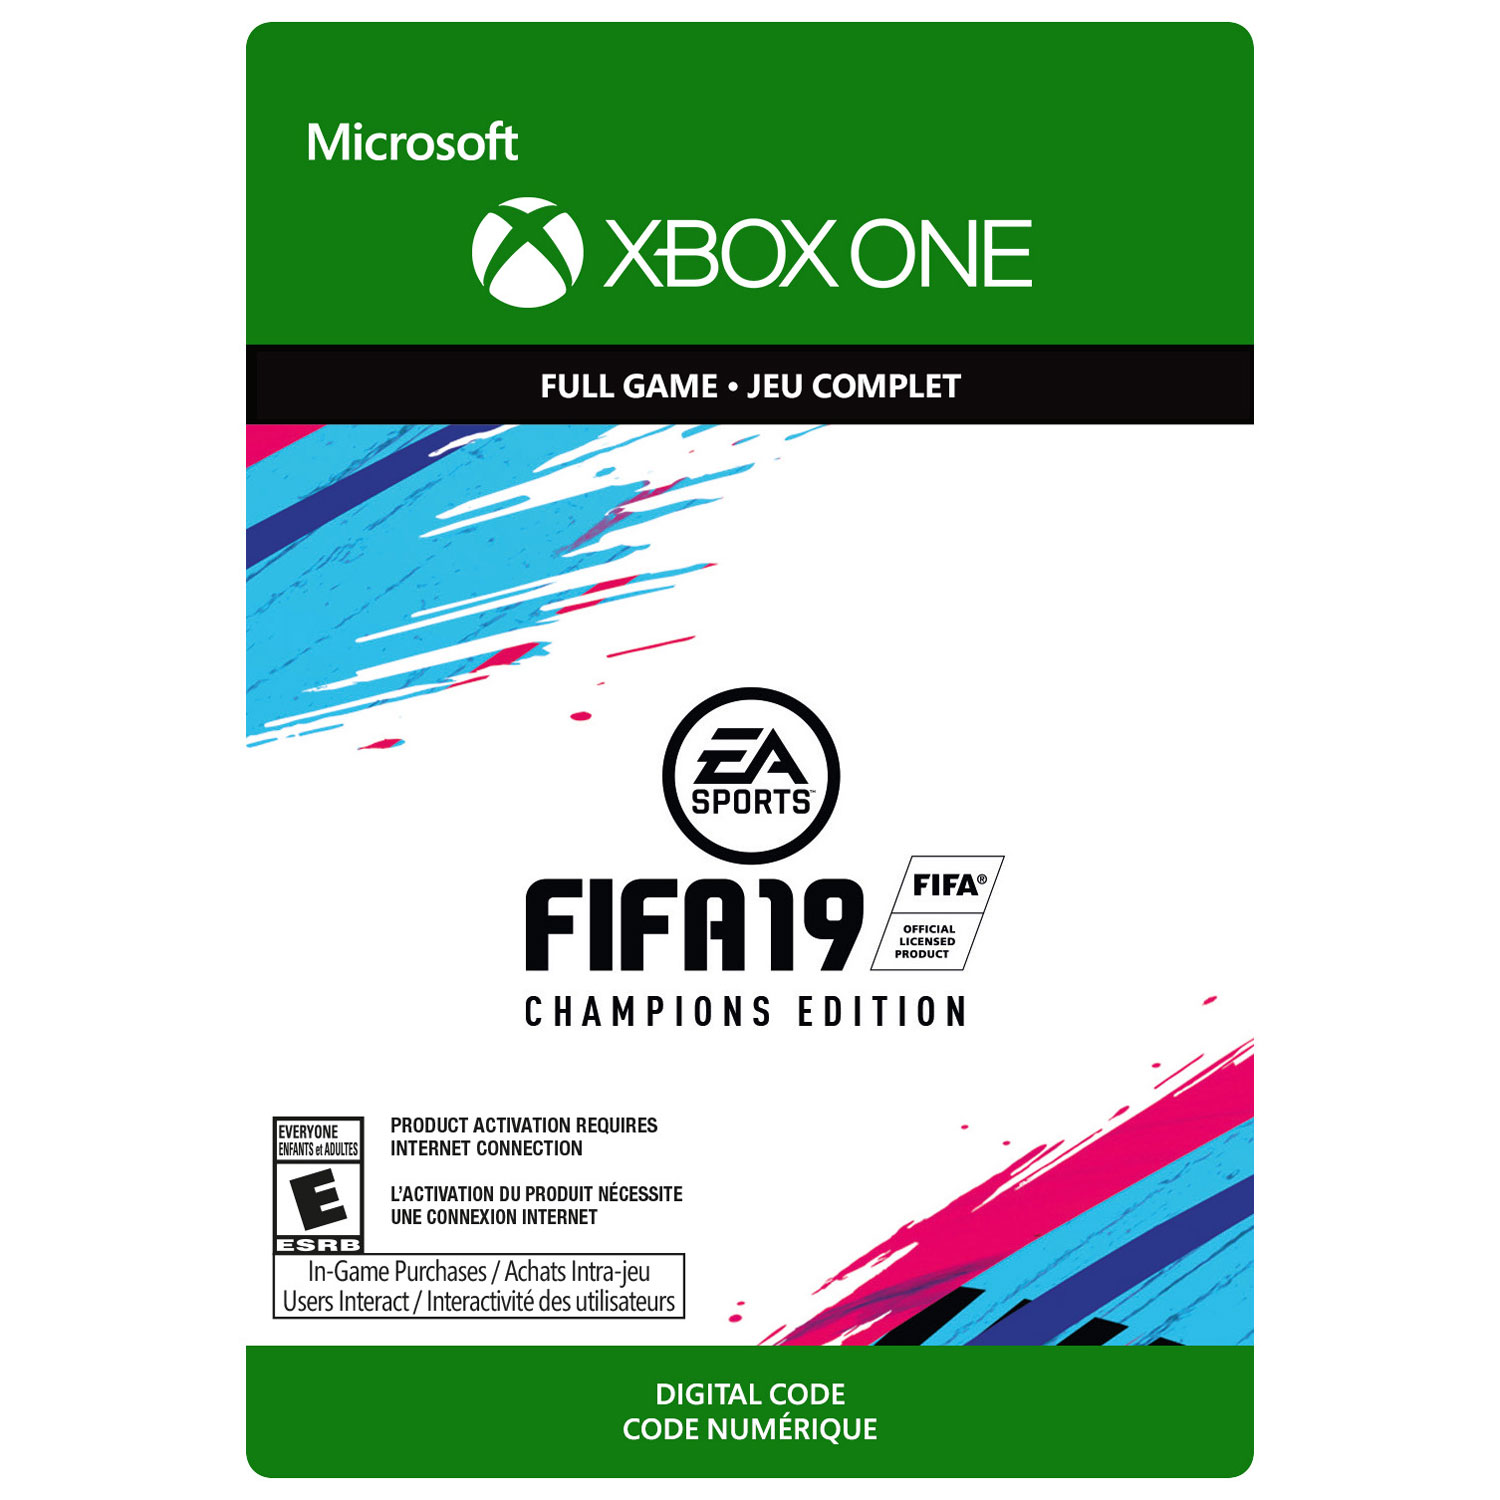 FIFA 19 Champions Edition (Xbox One) - Digital Download